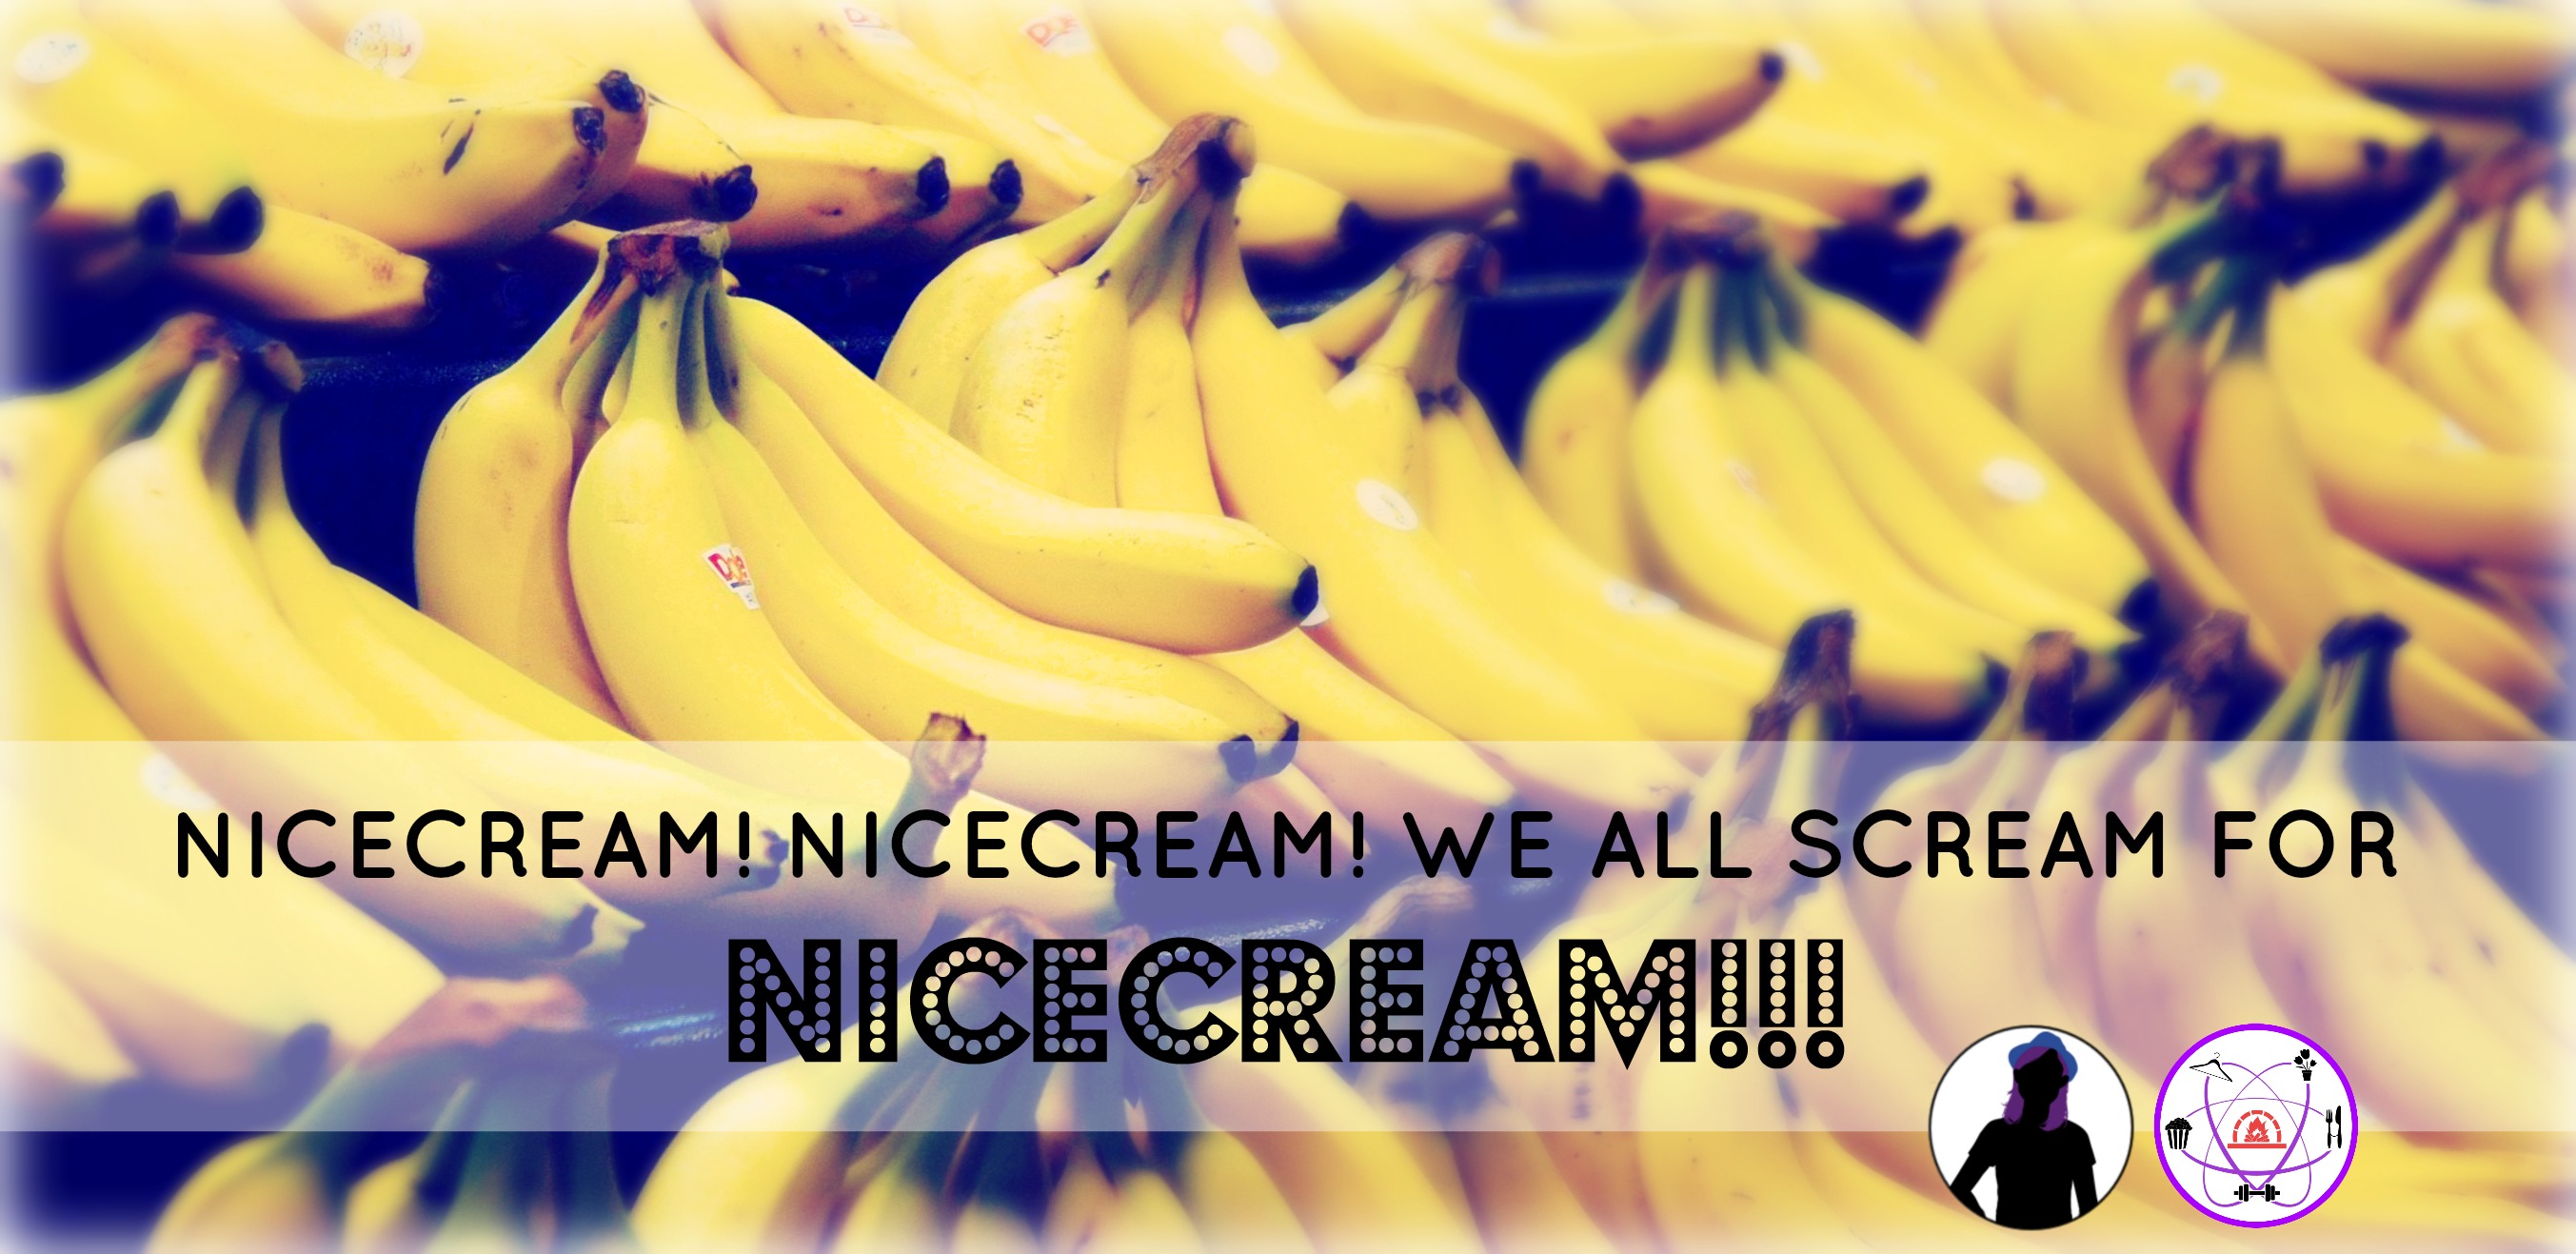 banana ice cream, dairy free ice cream, healthy foods